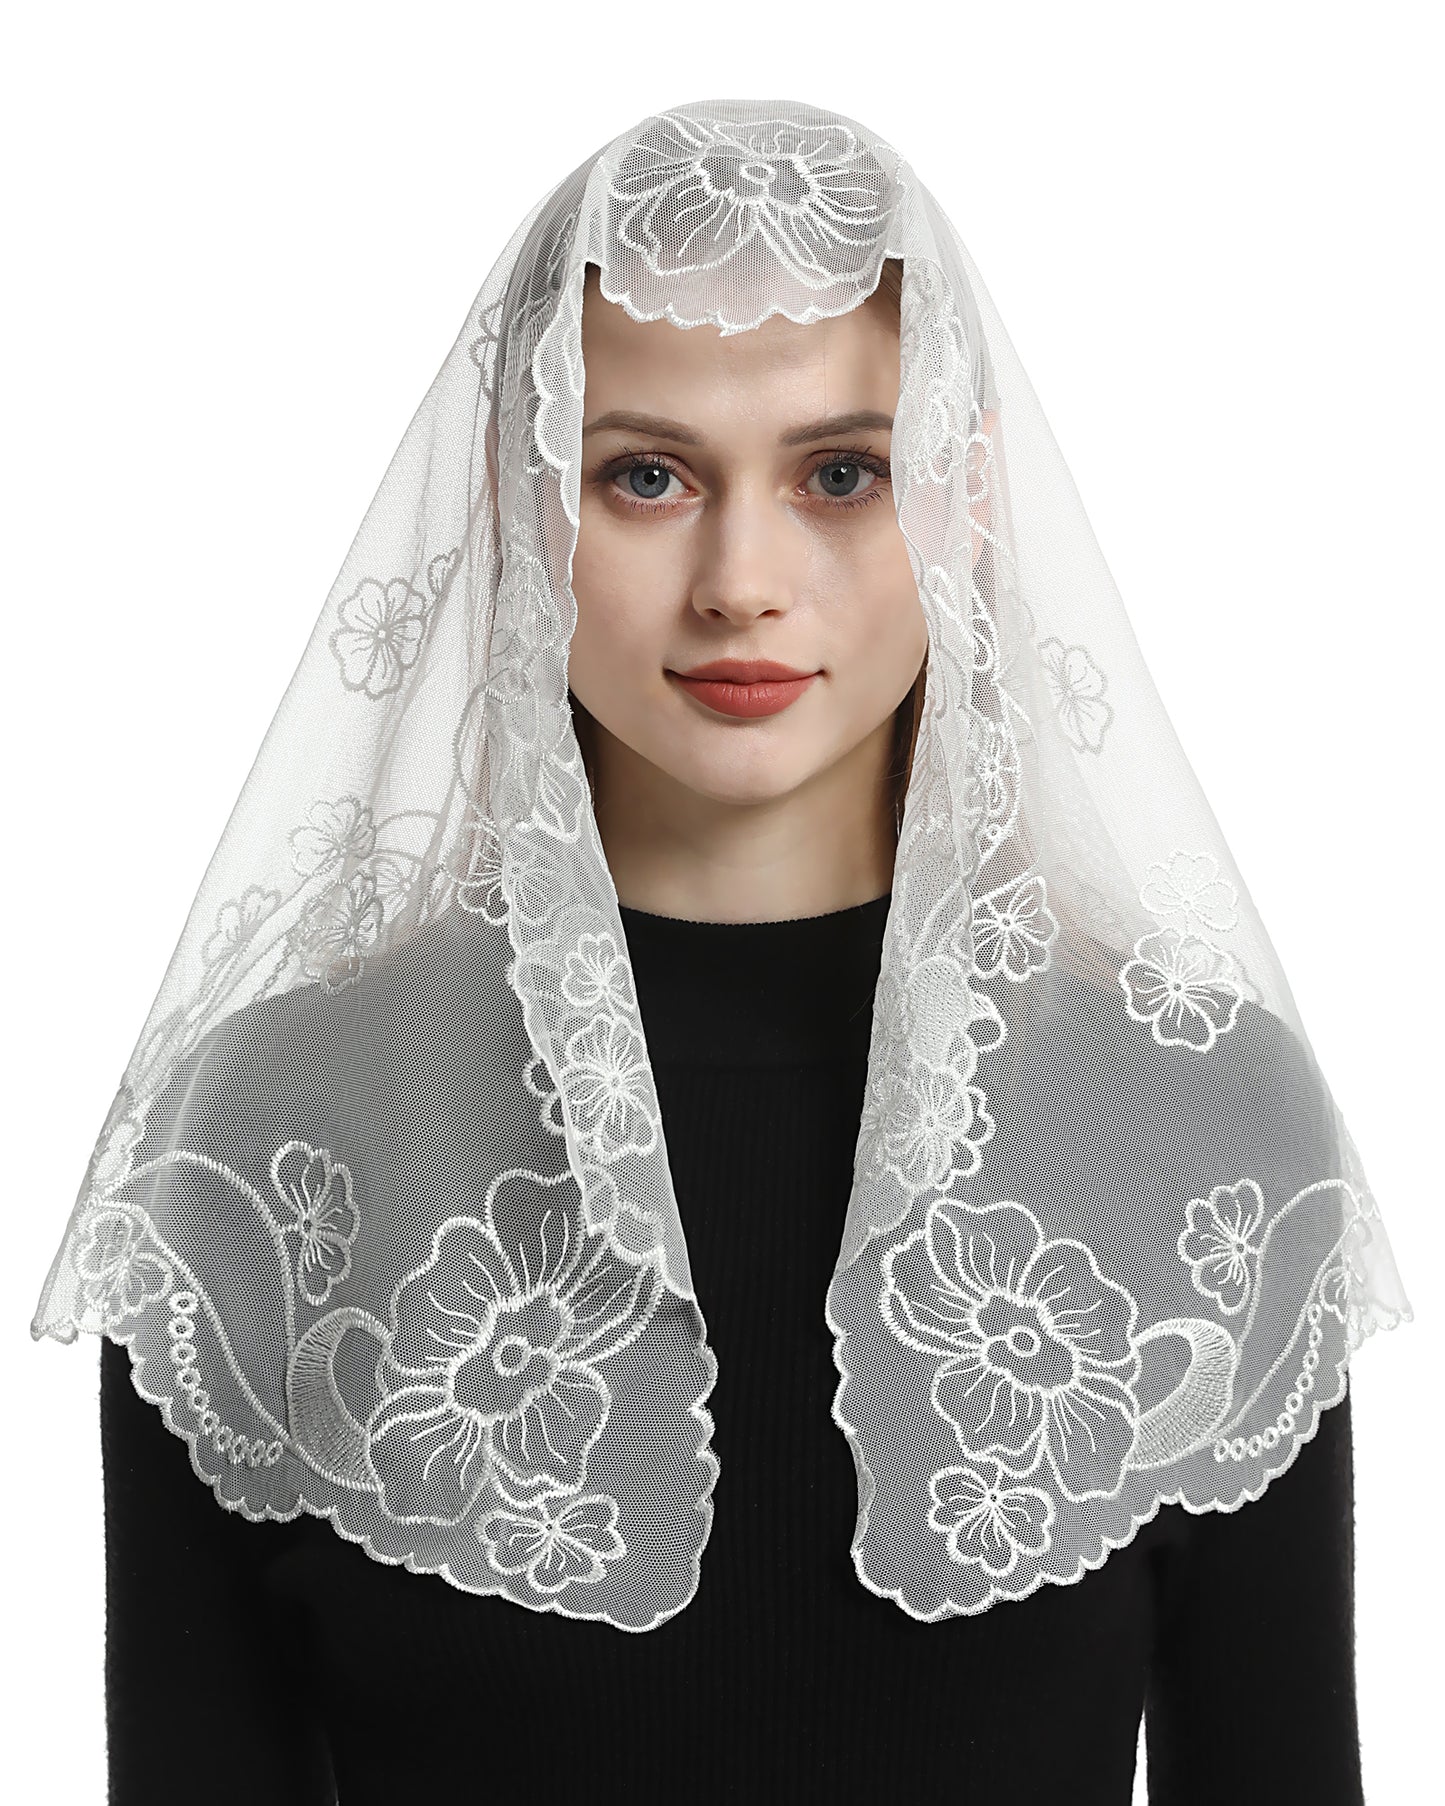 Bozidol Church Veil Lace Mantilla - D Shape Virgin Mary Embroidery Head Covering Spanish Catholic Mass Veil for Women